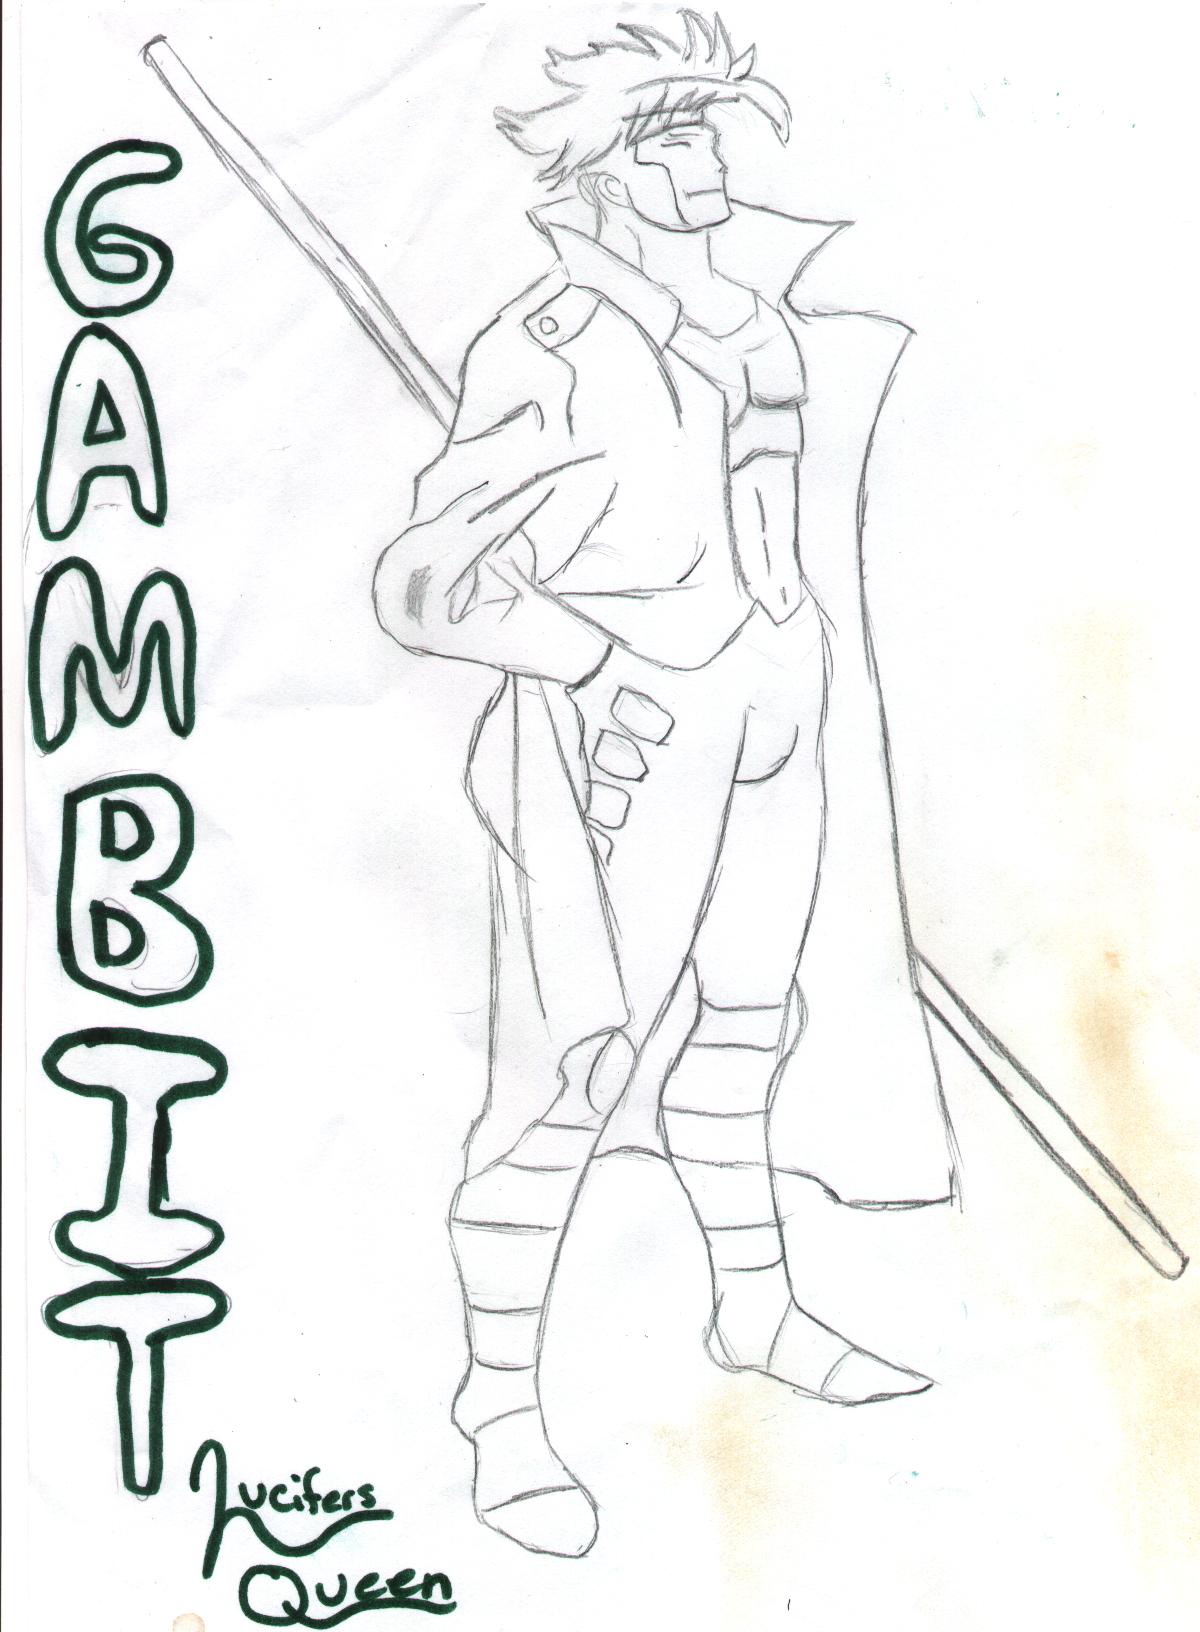 Gambit by Lucifers_Queen